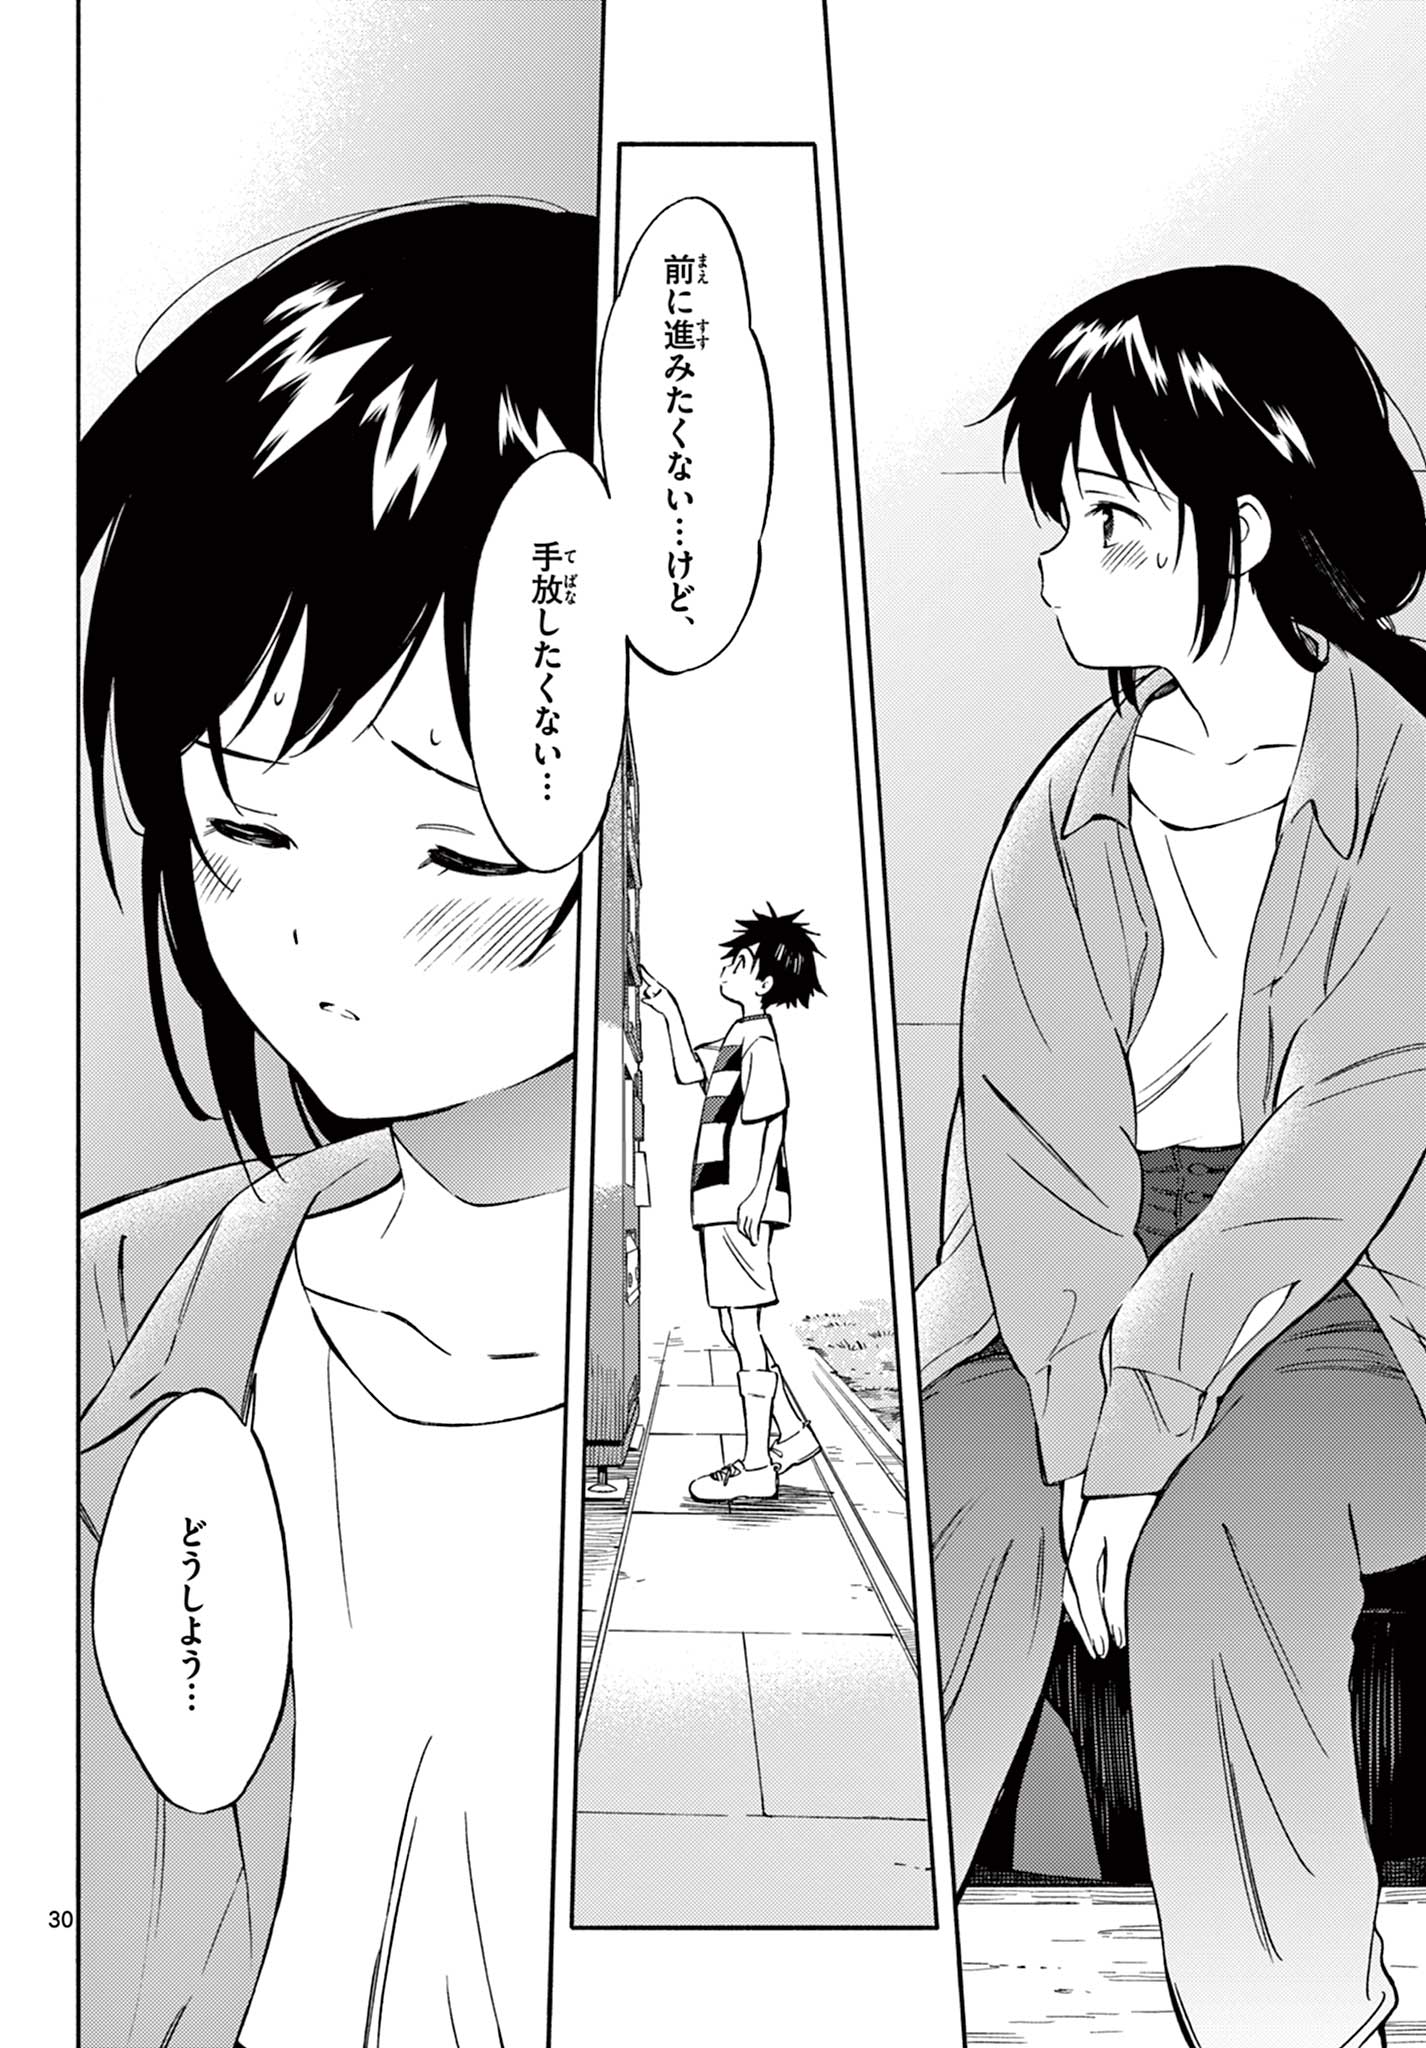 Nami no Shijima no Horizont - Chapter 15.2 - Page 15